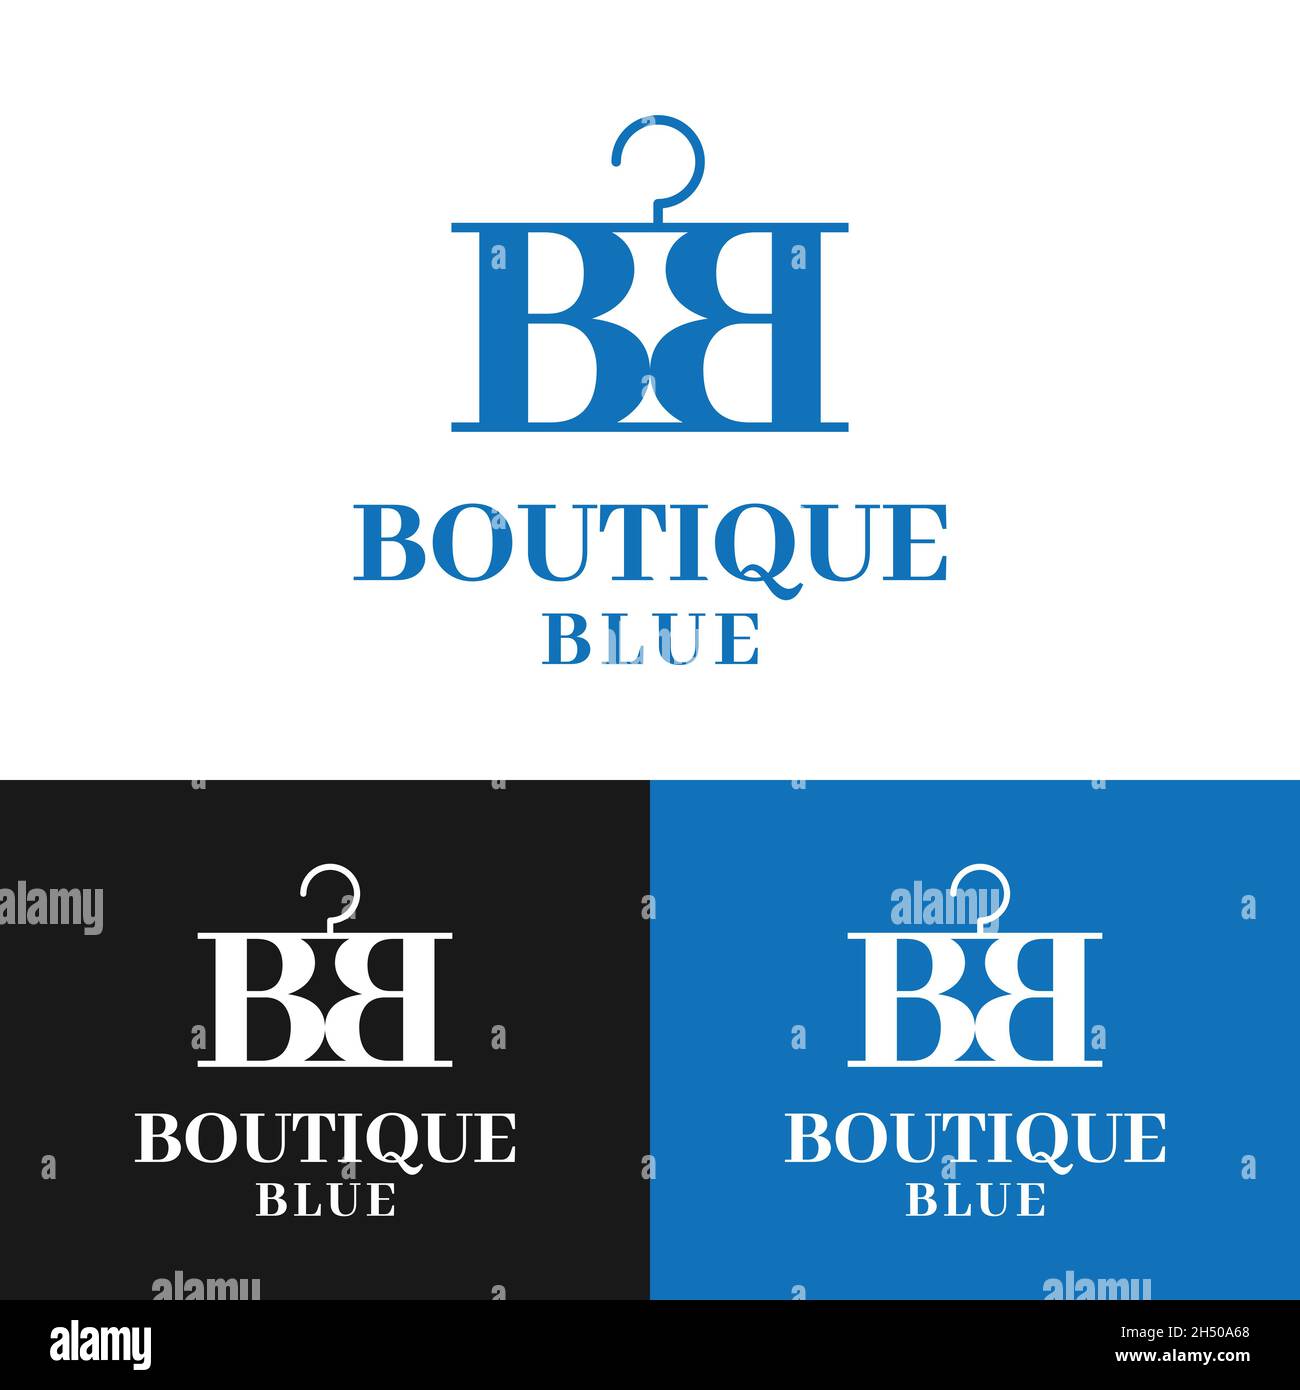 Letter Initial BB Hangers for Blue Boutique. Suitable for Clothes Fashion Apparel Retail E Commerce Shop Store Business Brand Simple Flat Logo Design. Stock Vector